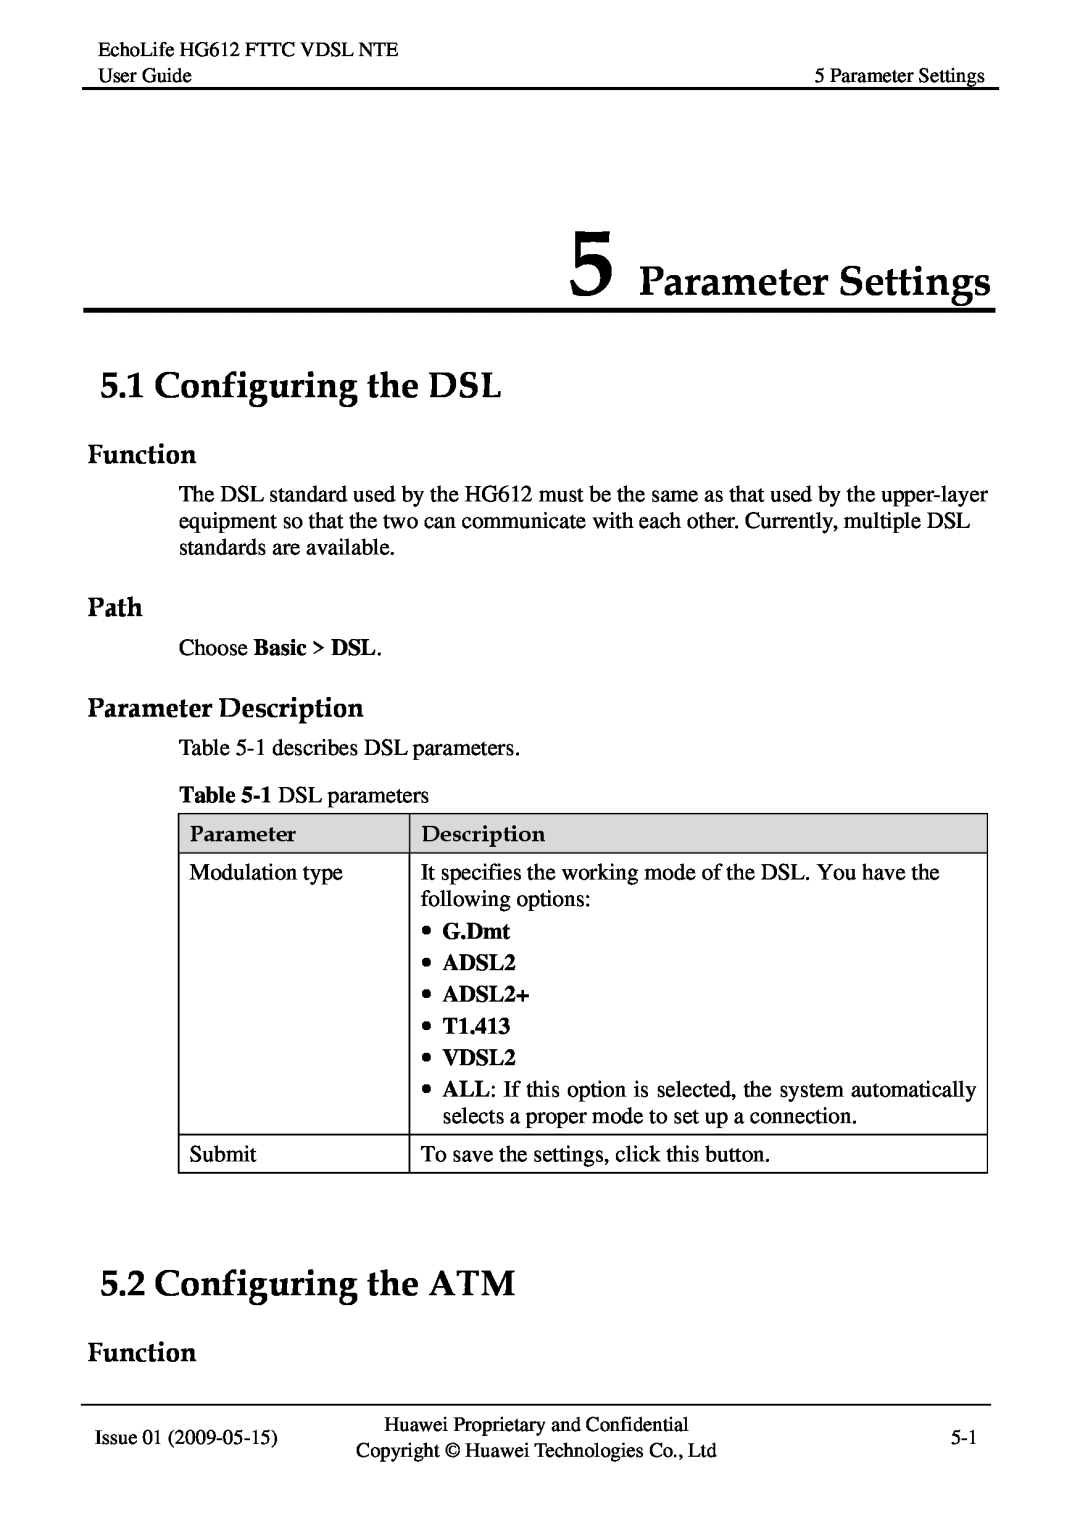 Huawei HG612FTTC VDSL NTE manual Parameter Settings, Configuring the DSL, Configuring the ATM, Function, Path, Description 